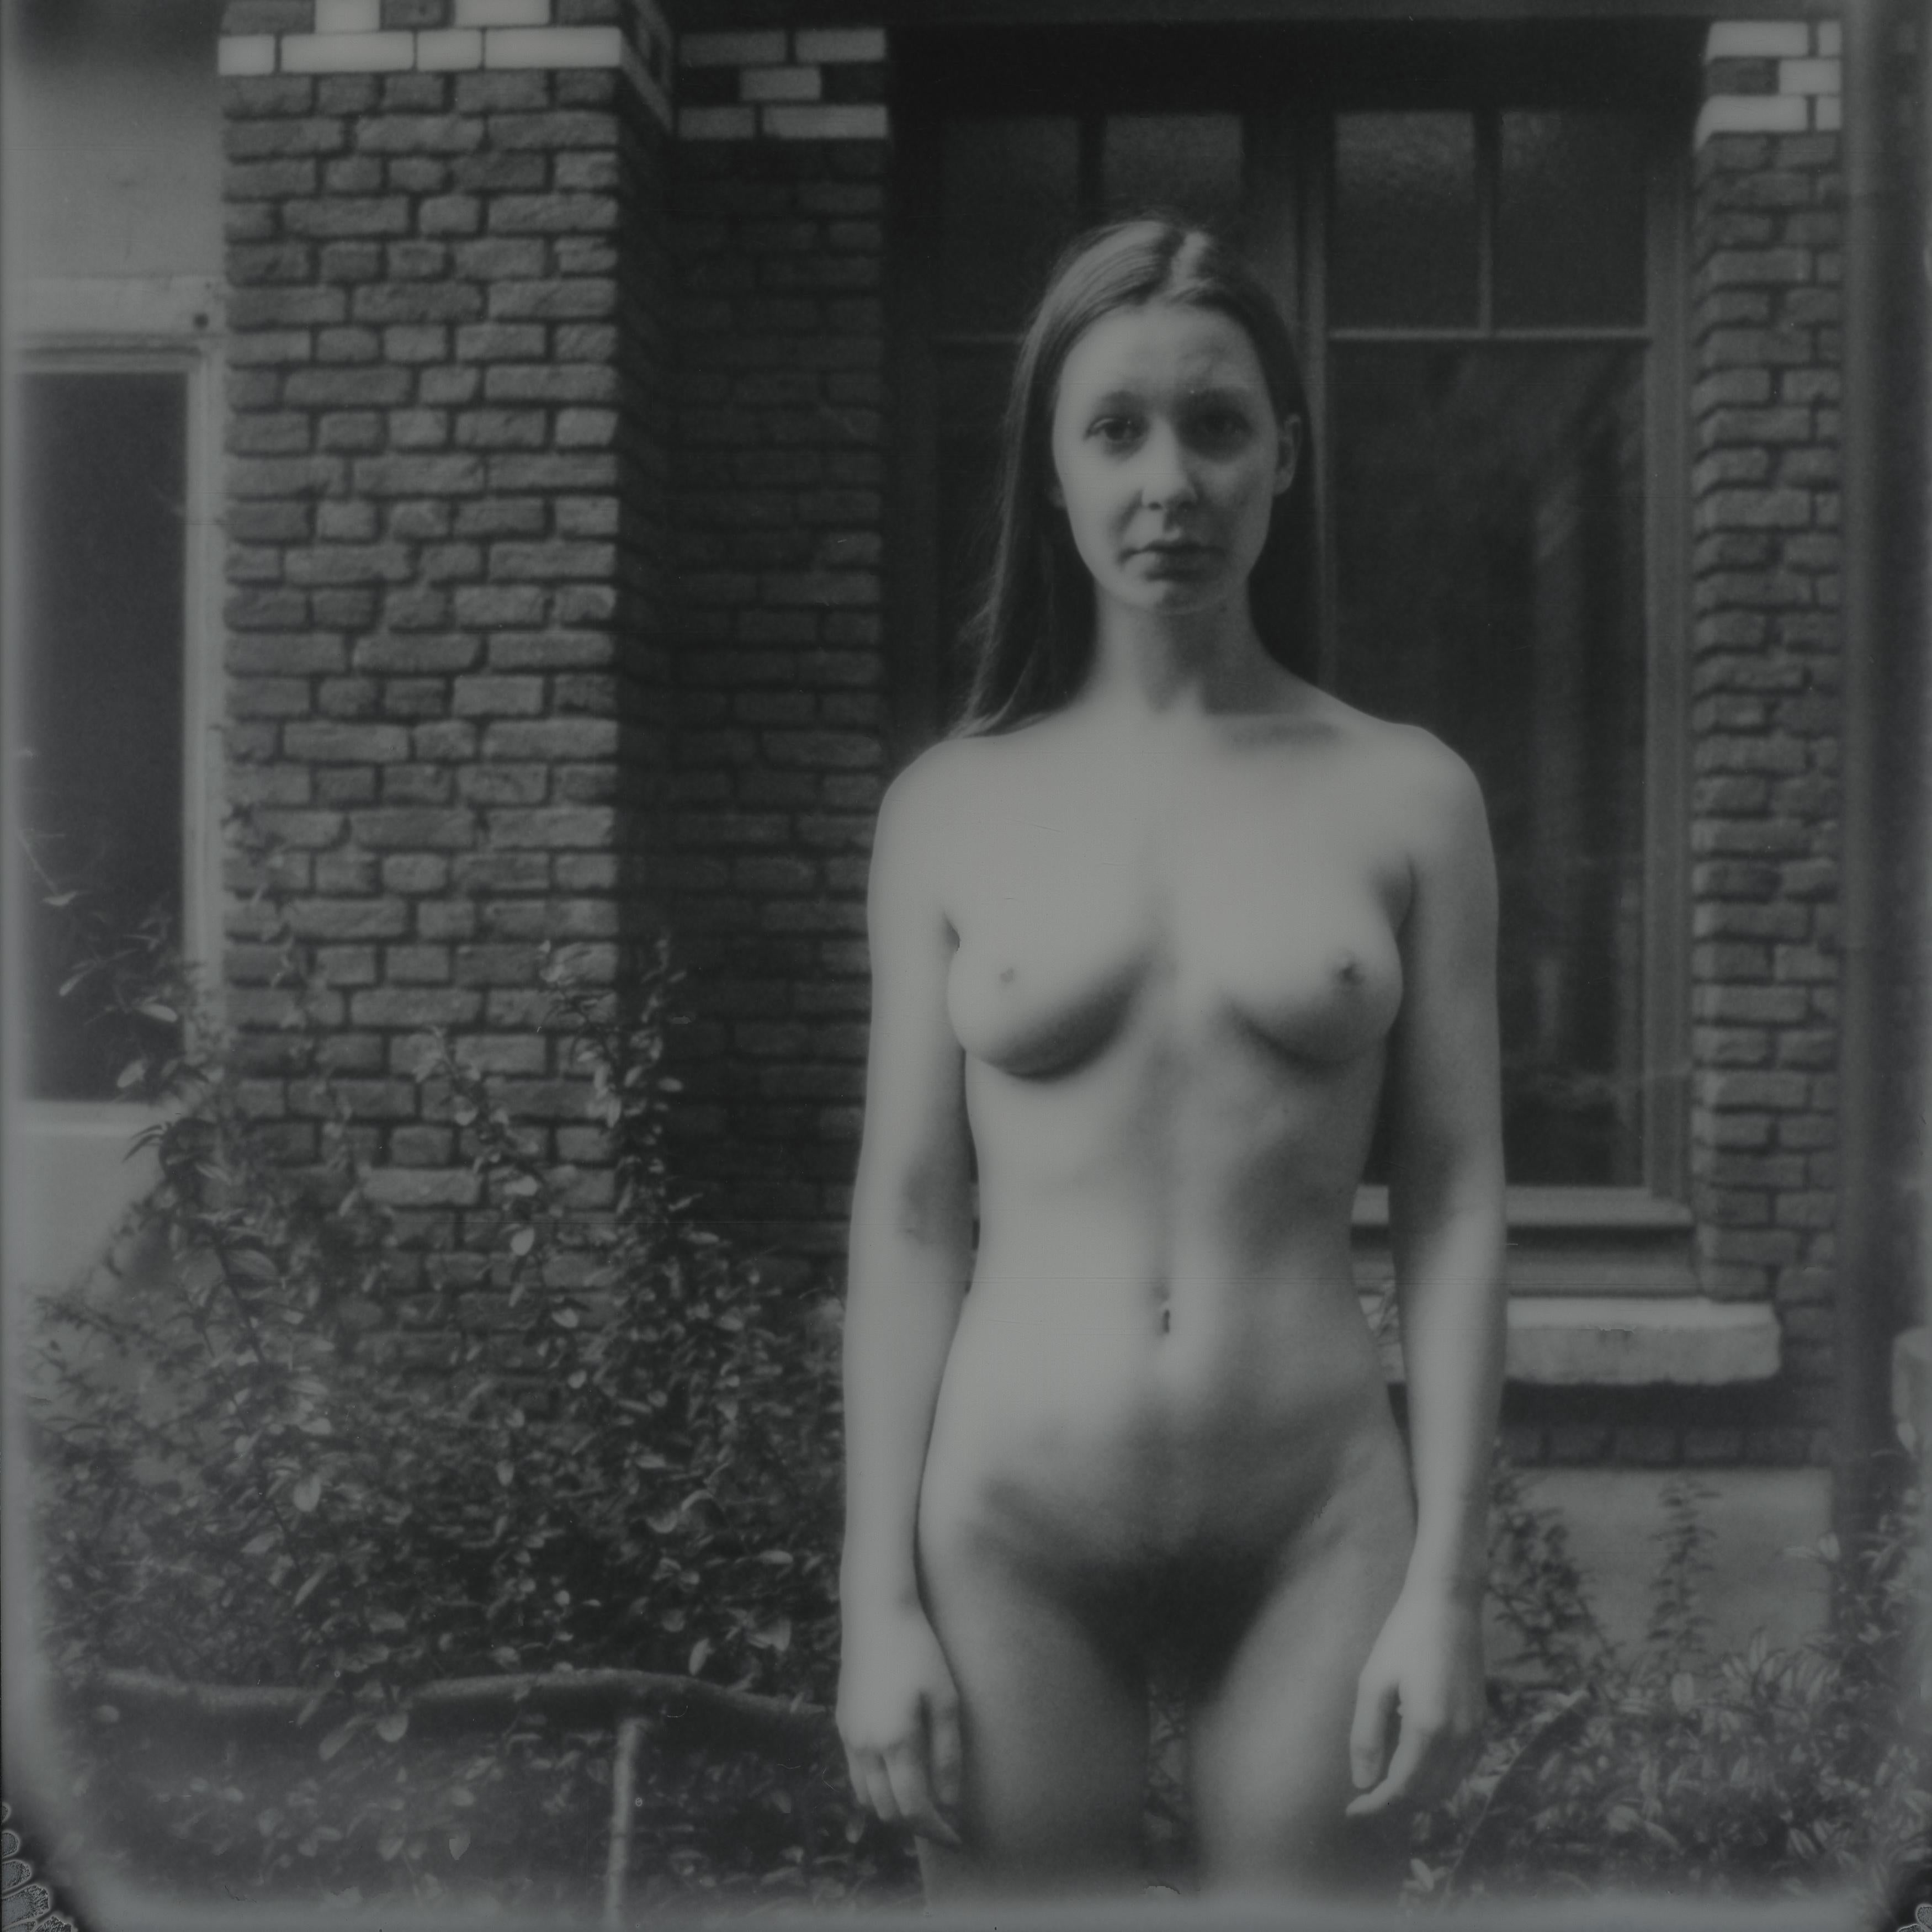 Kirsten Thys van den Audenaerde Nude Photograph - I'm only happy when it rains - Contemporary, Nude, Women, Polaroid, 21st Century